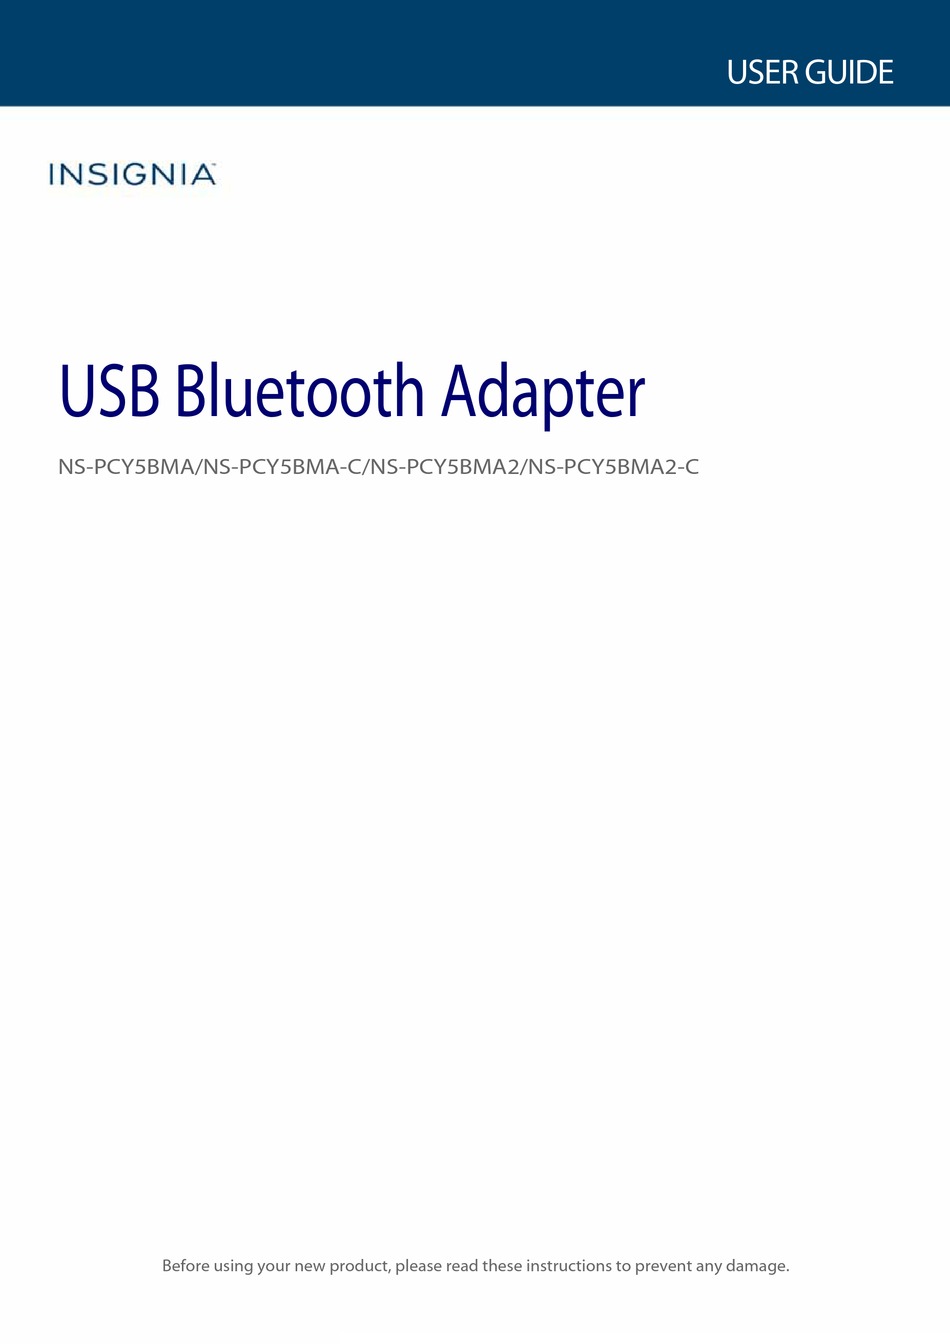 insignia bluetooth adapter usb 3.0